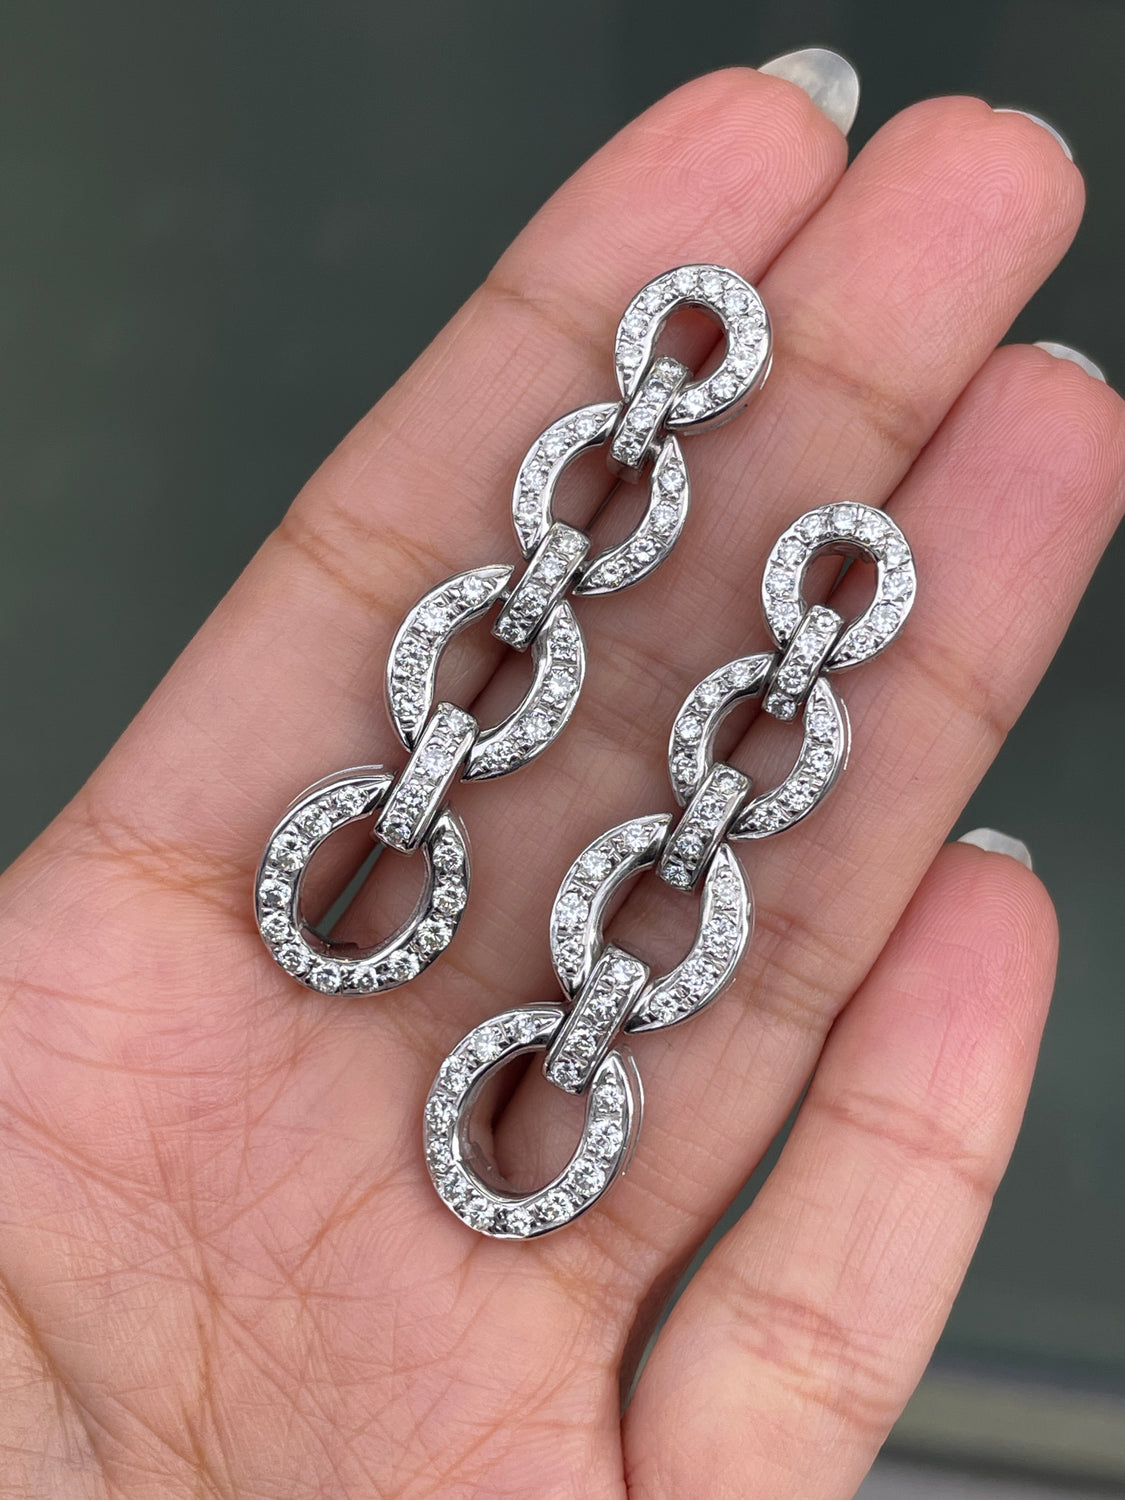 Diamond 18 Carat White Gold Graduating Circular Link Dangle Earrings